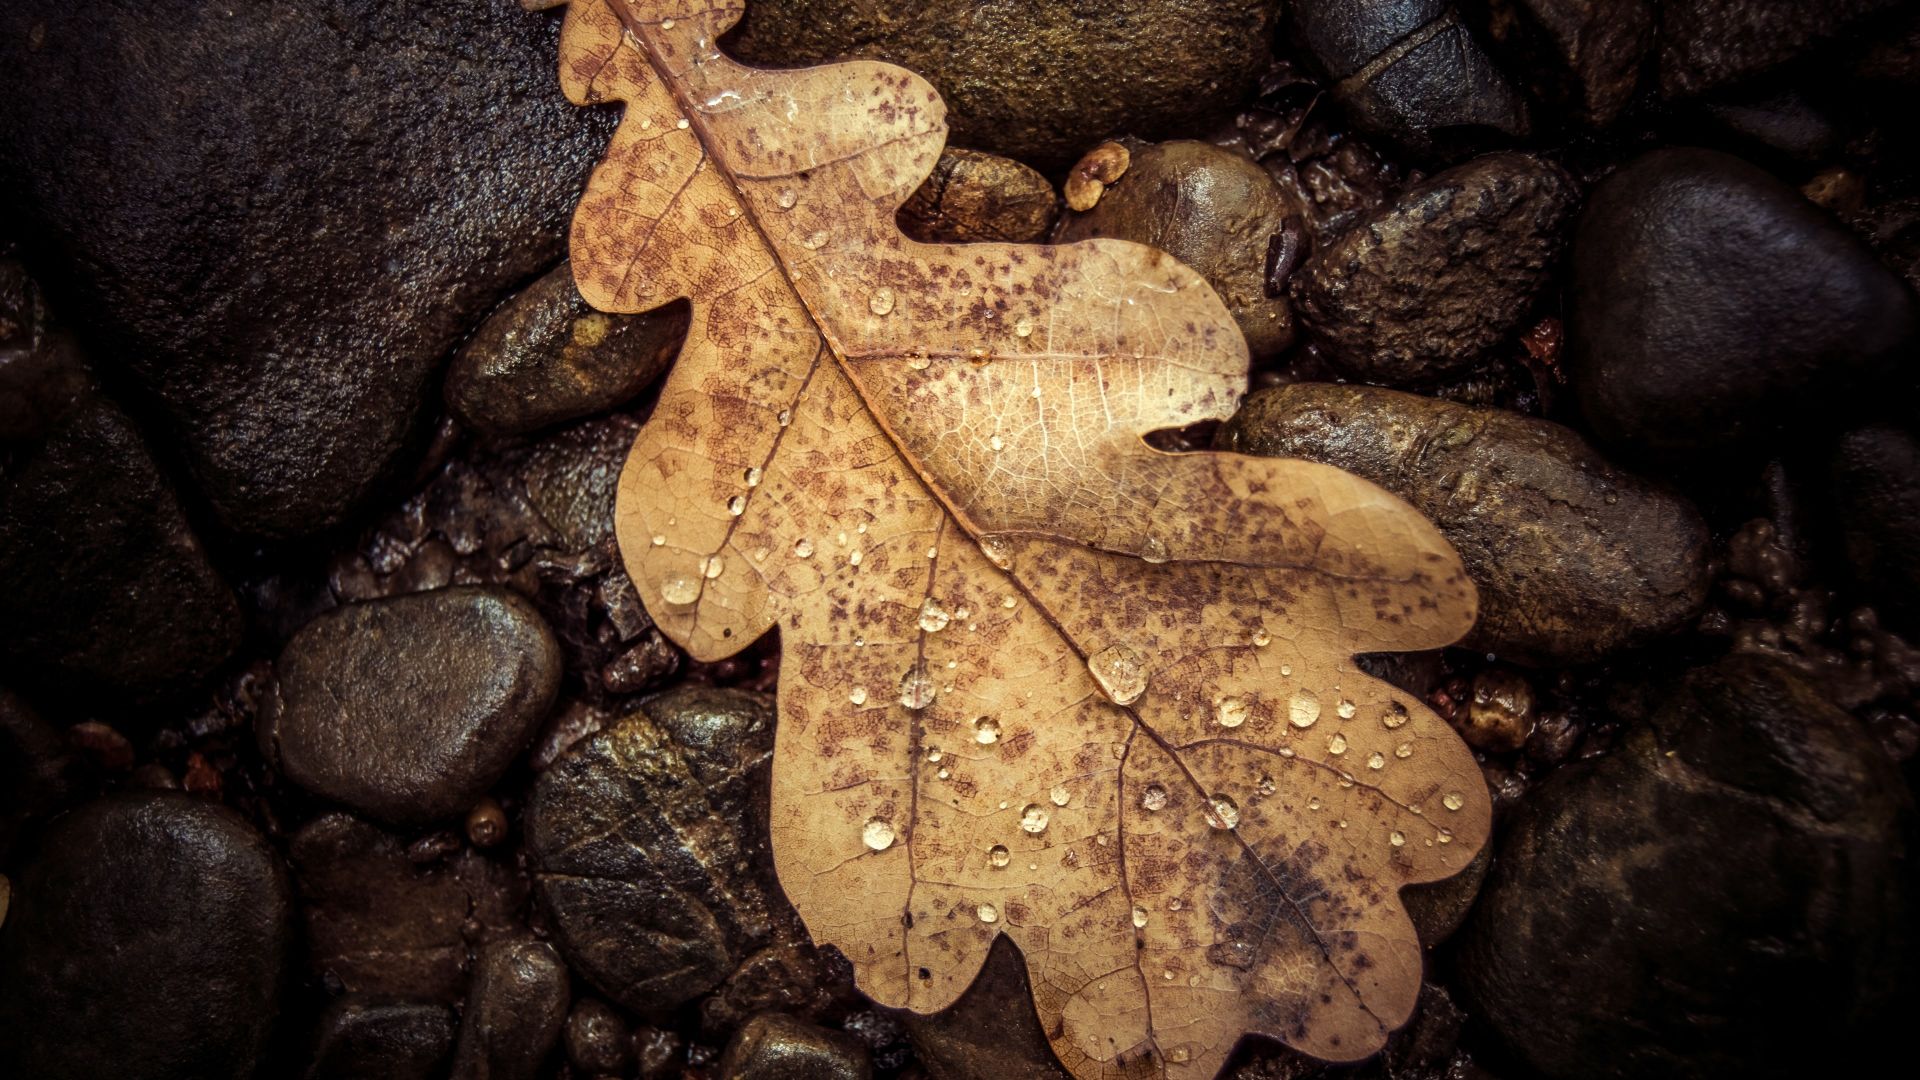 Desktop Wallpaper Dry Leaf Water Drops, Hd Image, Picture, Background,  K7aqsd